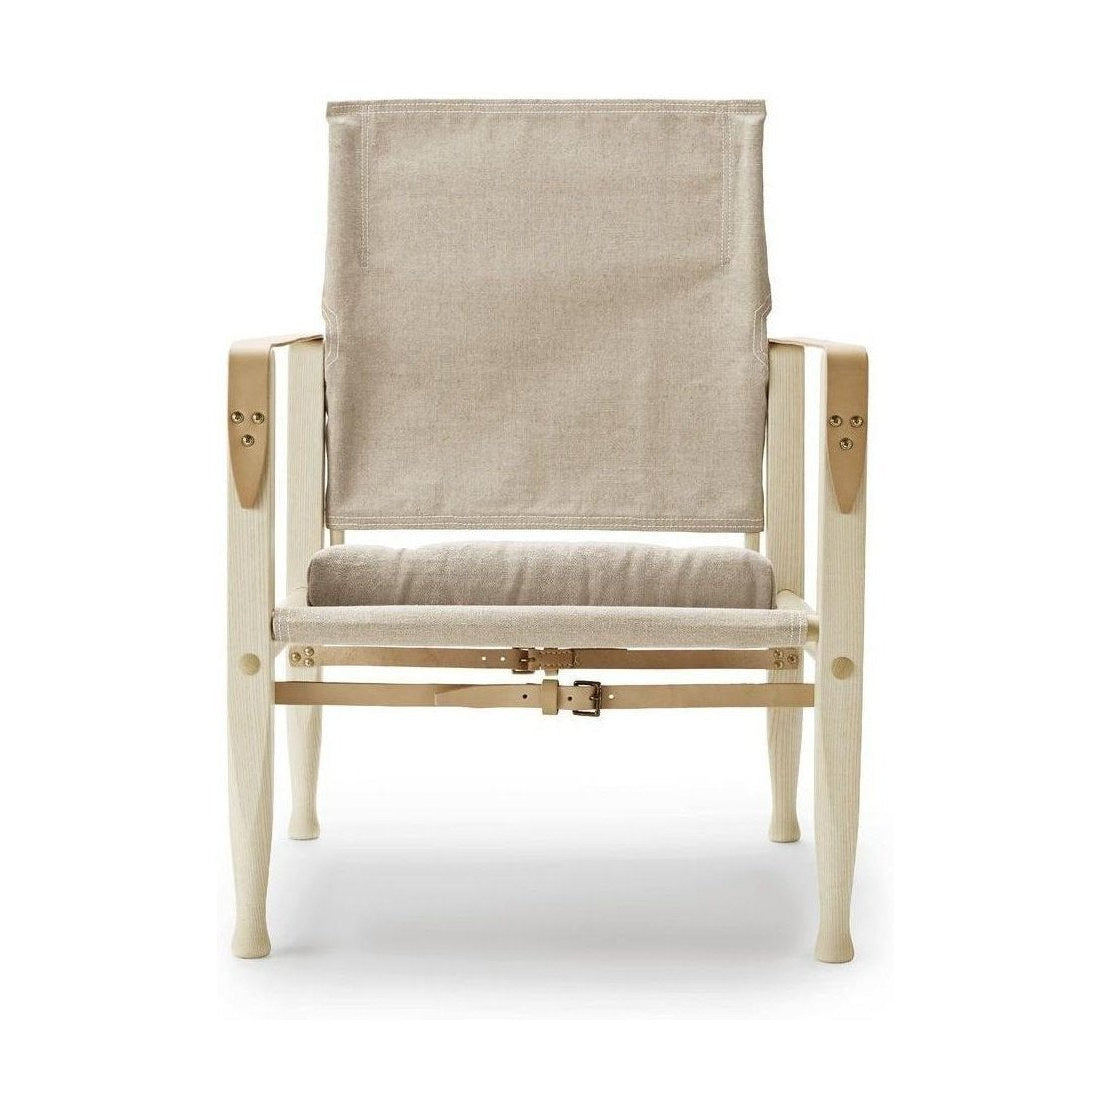 Carl Hansen Kk47000 Safari Chair, Oiled Ash/Natural